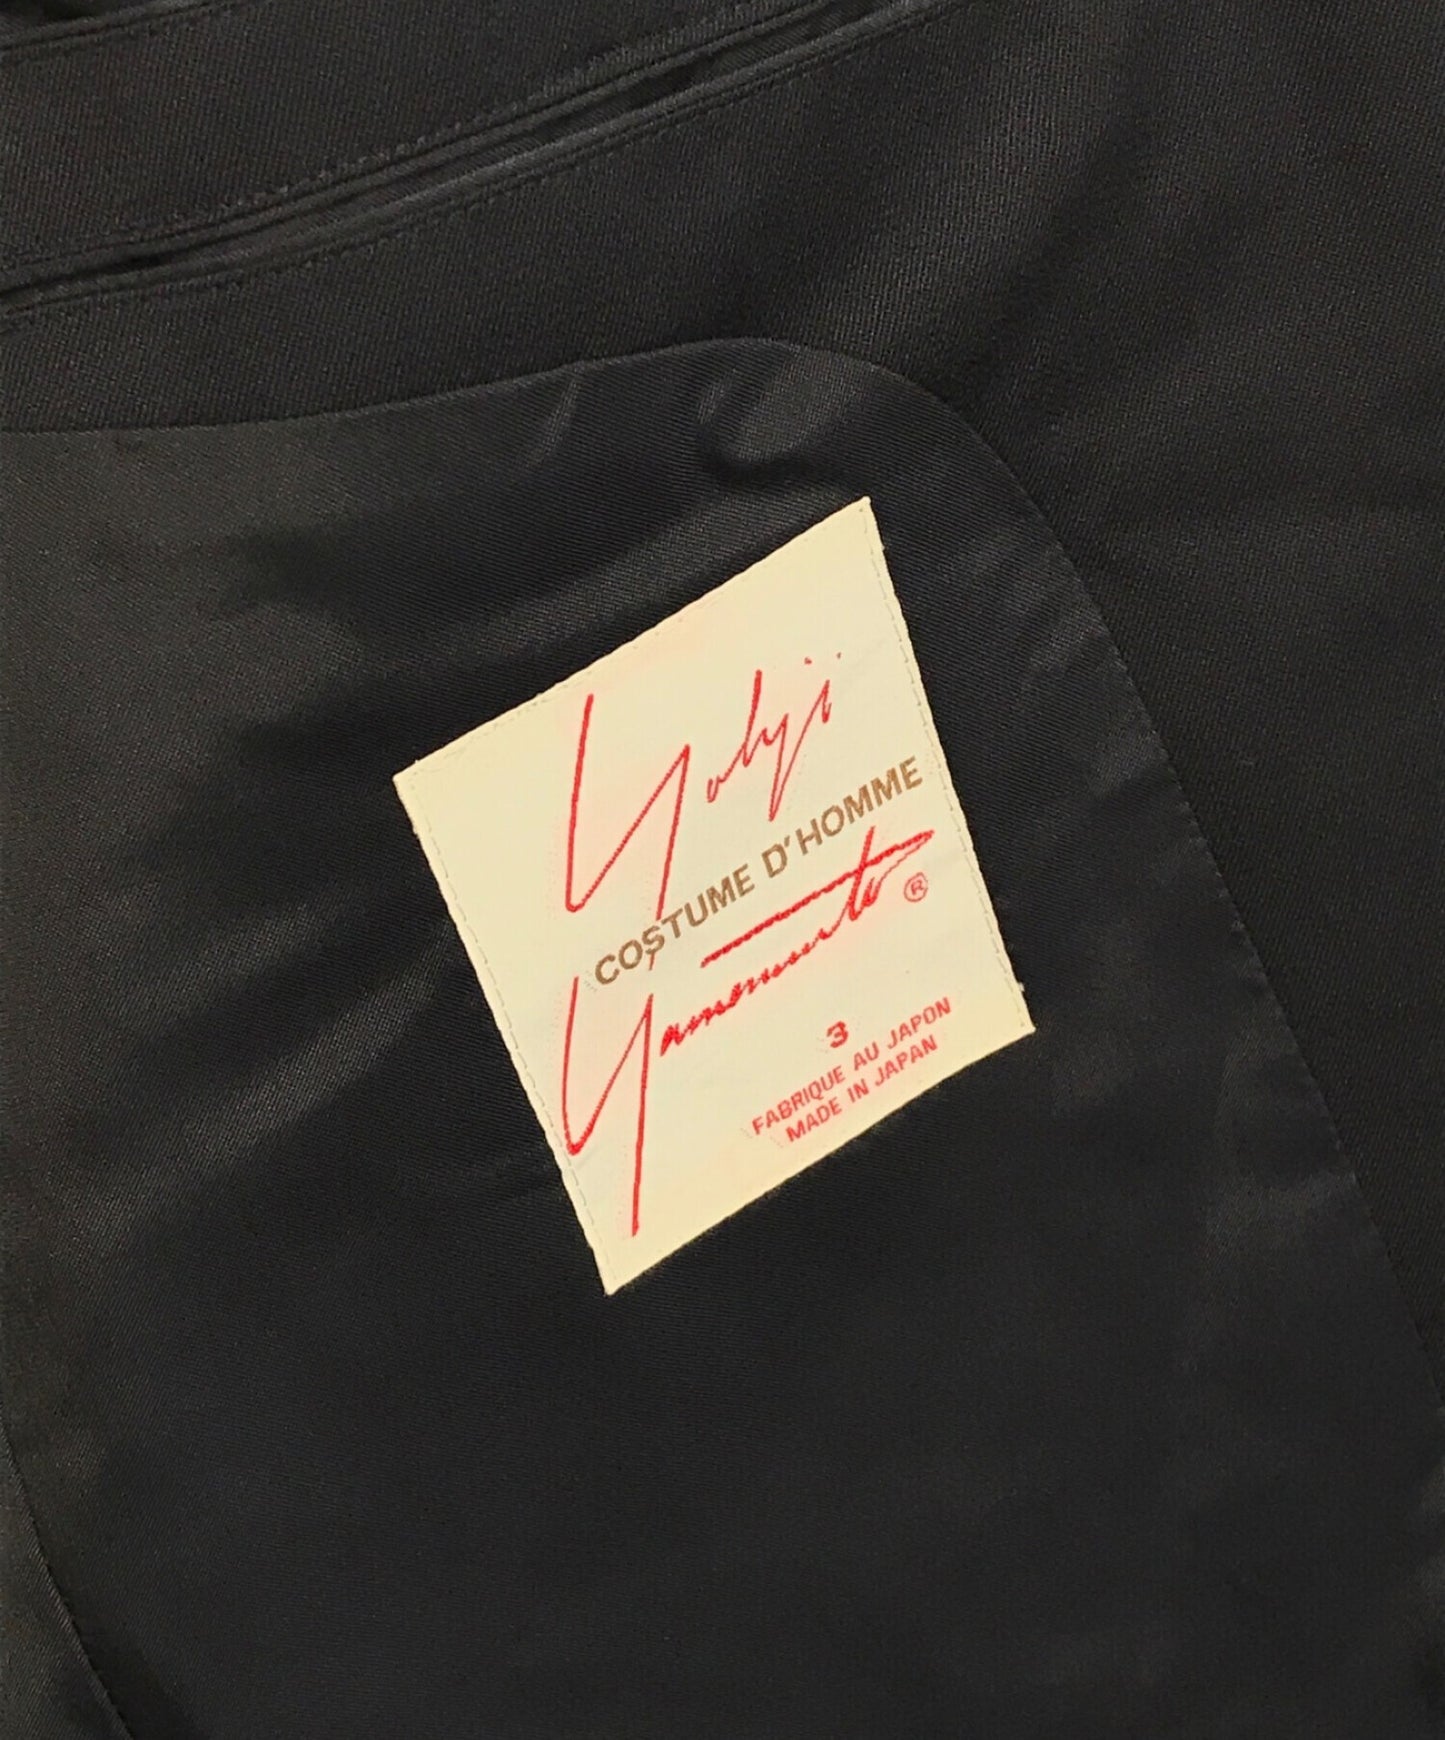 [Pre-owned] YOHJI YAMAMOTO tailored jacket HZ-J-80-110